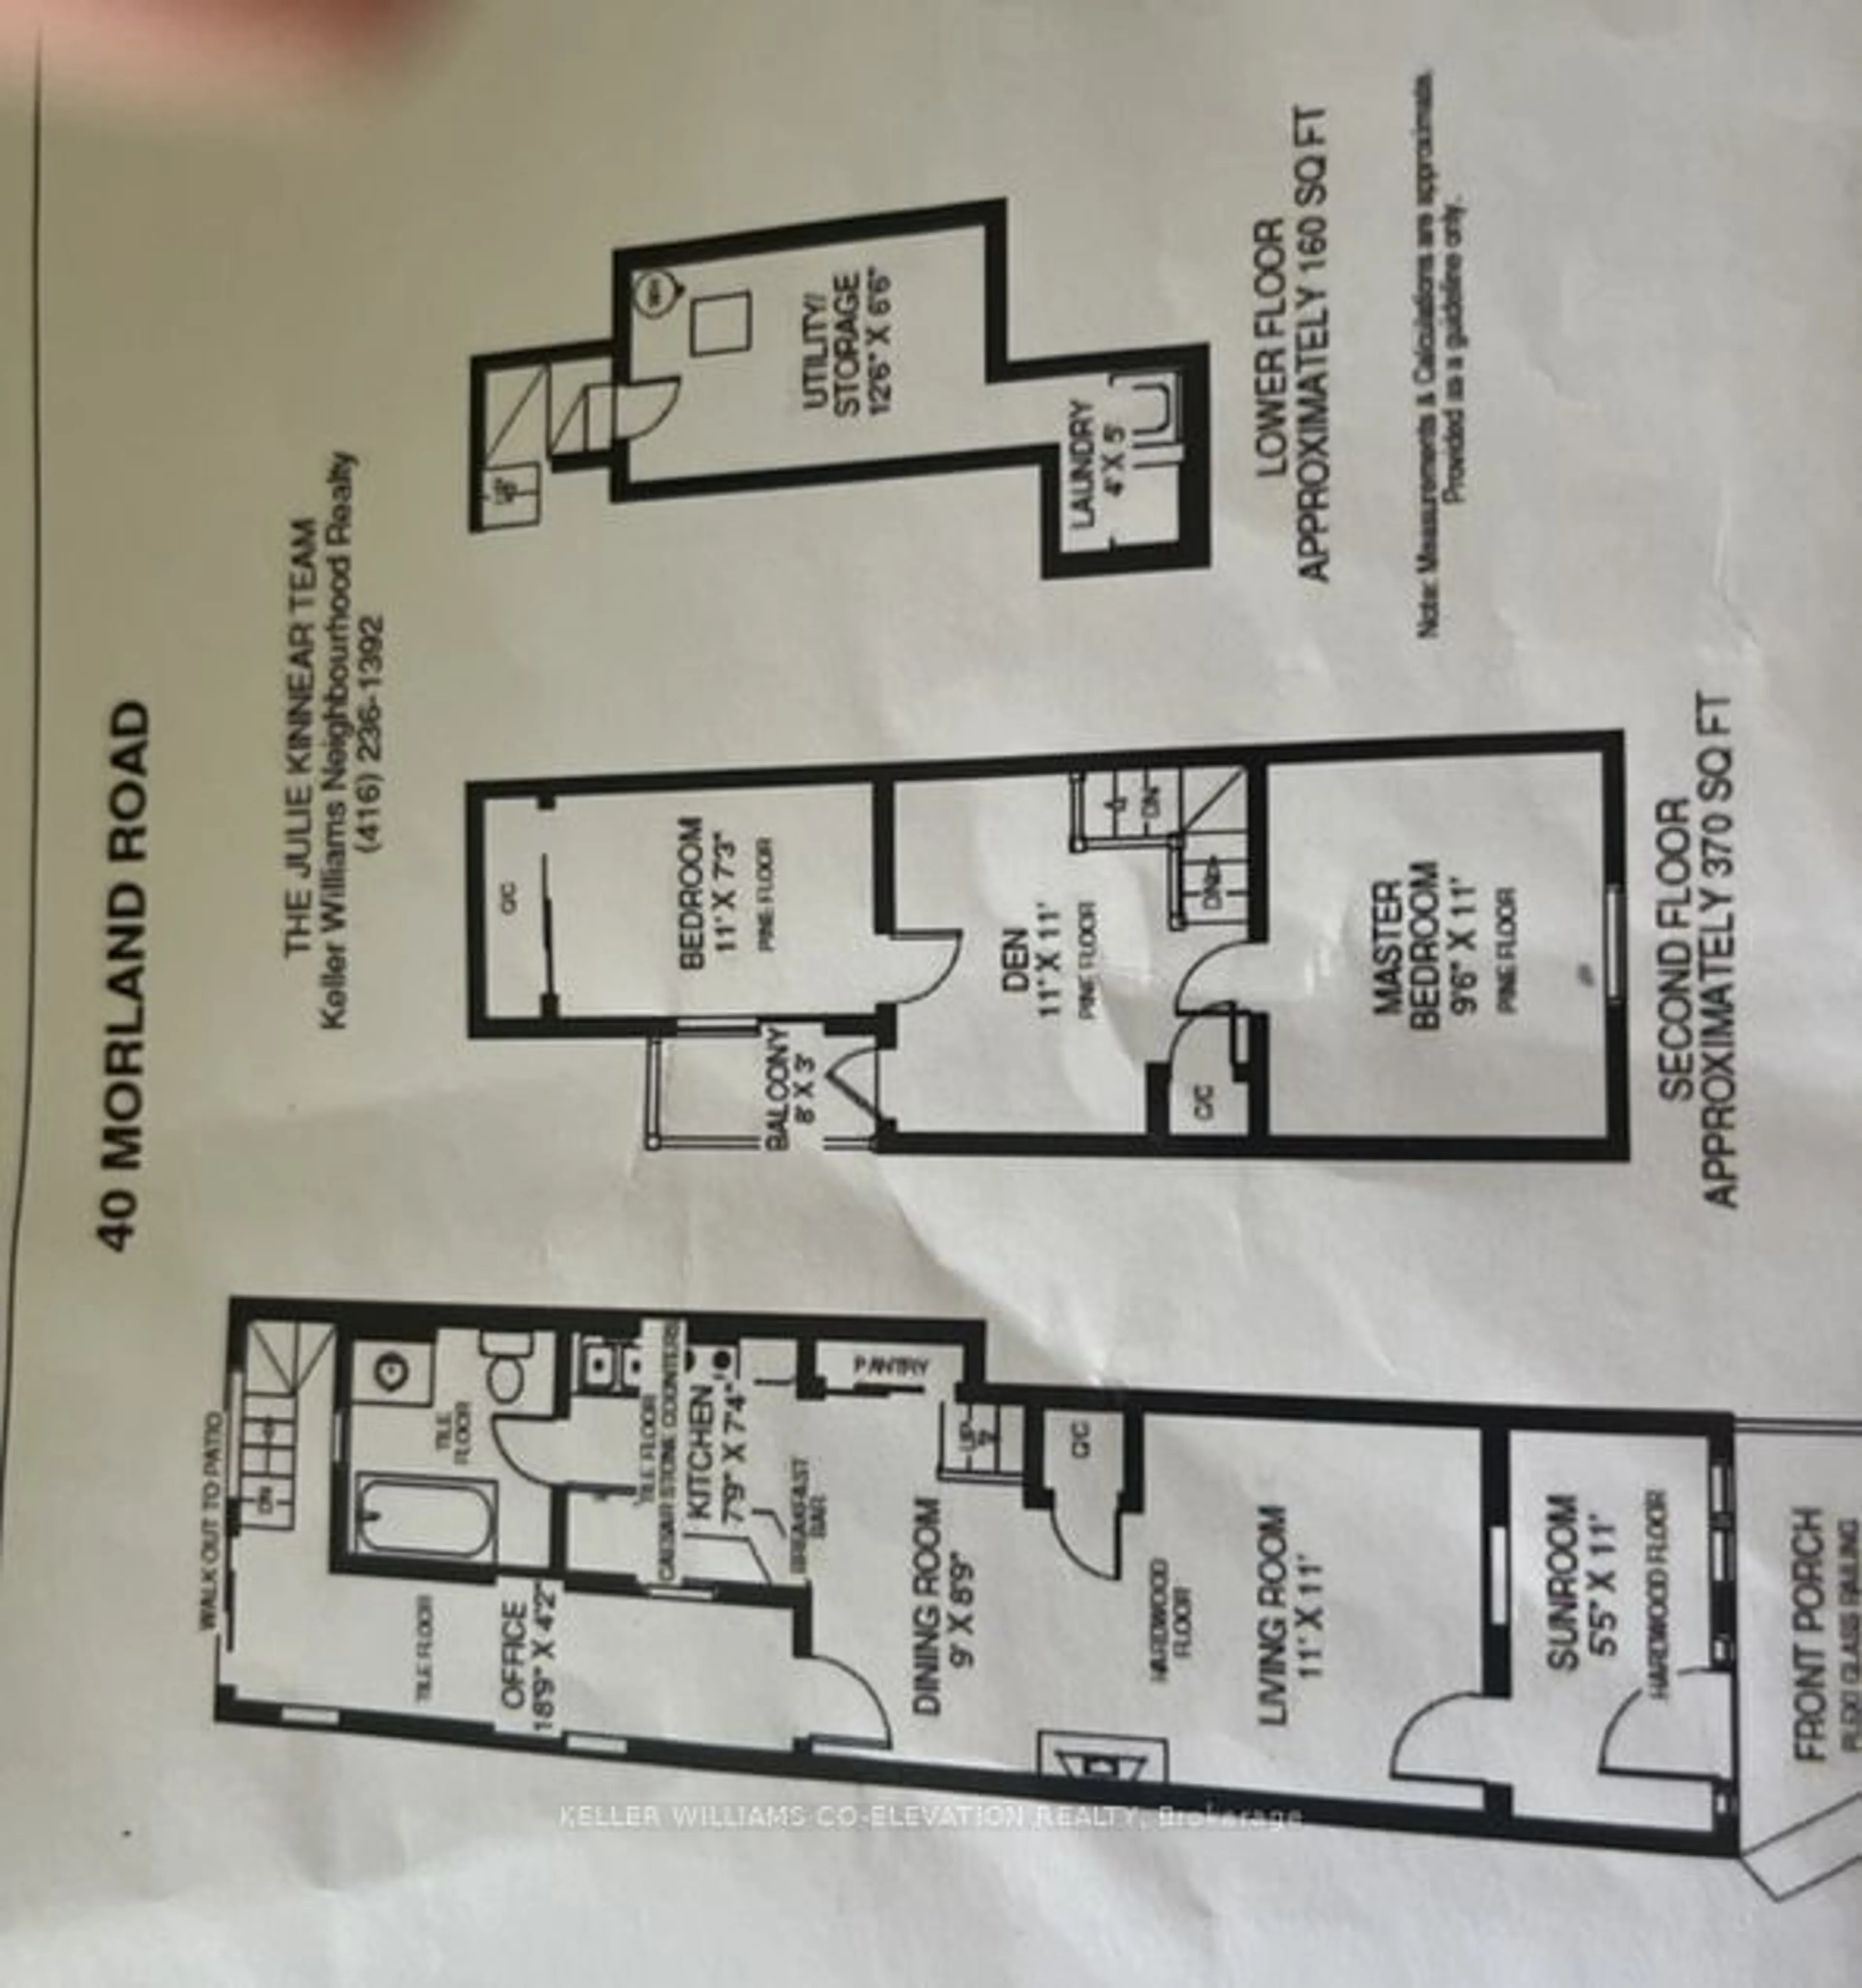 Floor plan for 40 Morland Rd, Toronto Ontario M6S 2M8